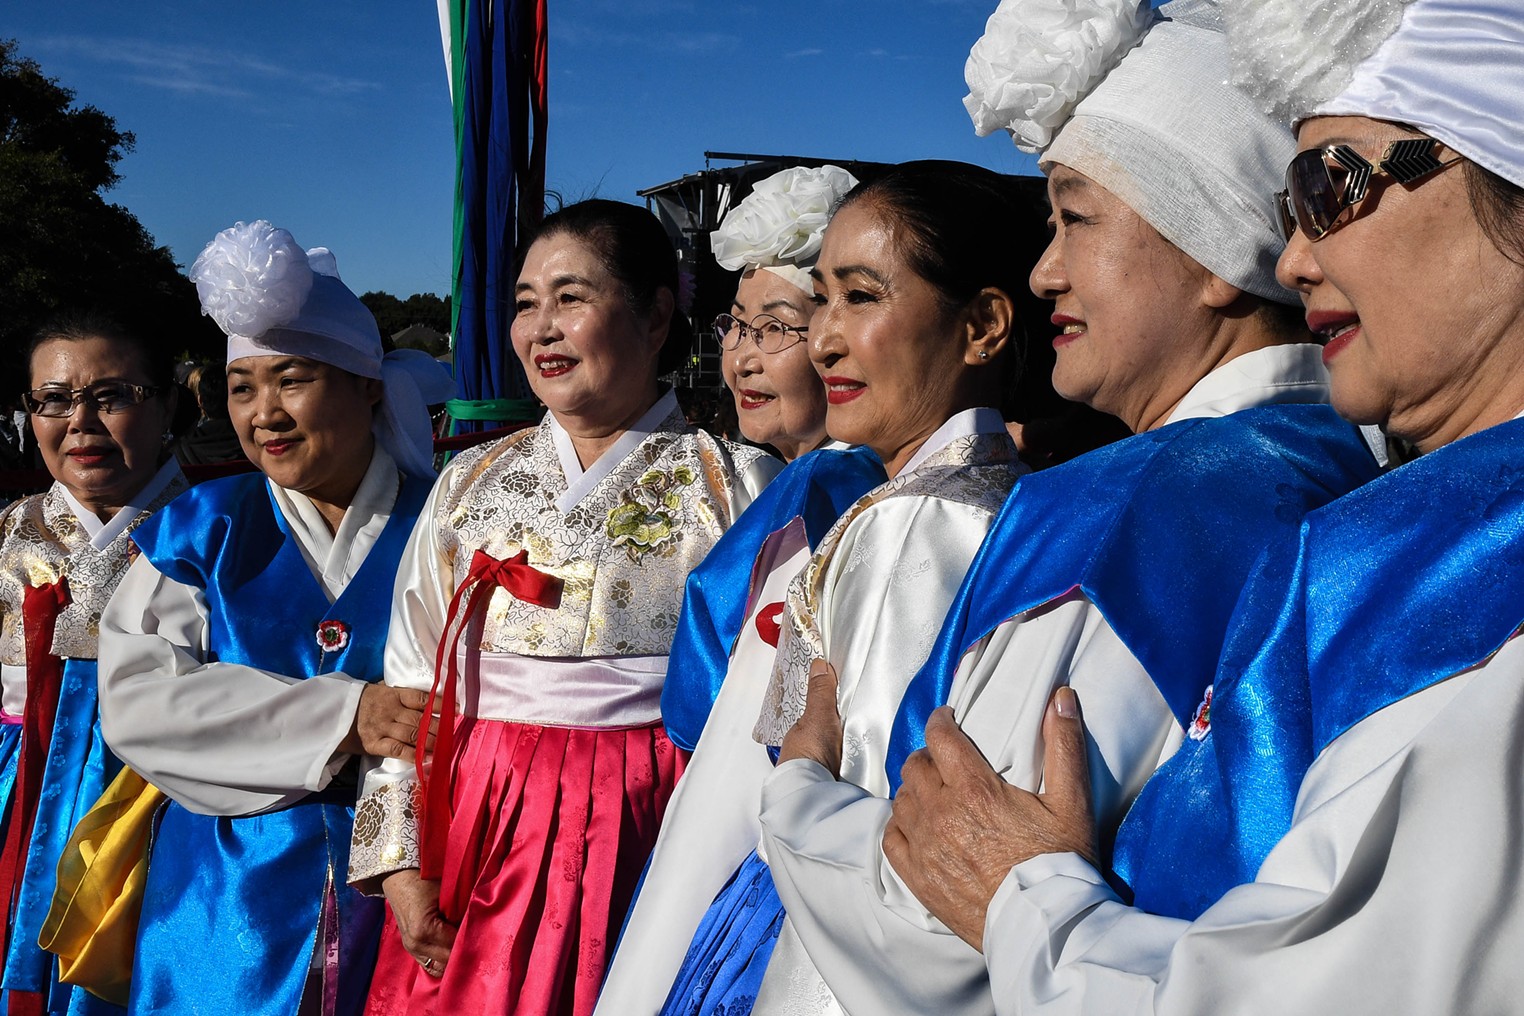 The Korean Festival in Carrollton is a Tasty Cultural Explosion